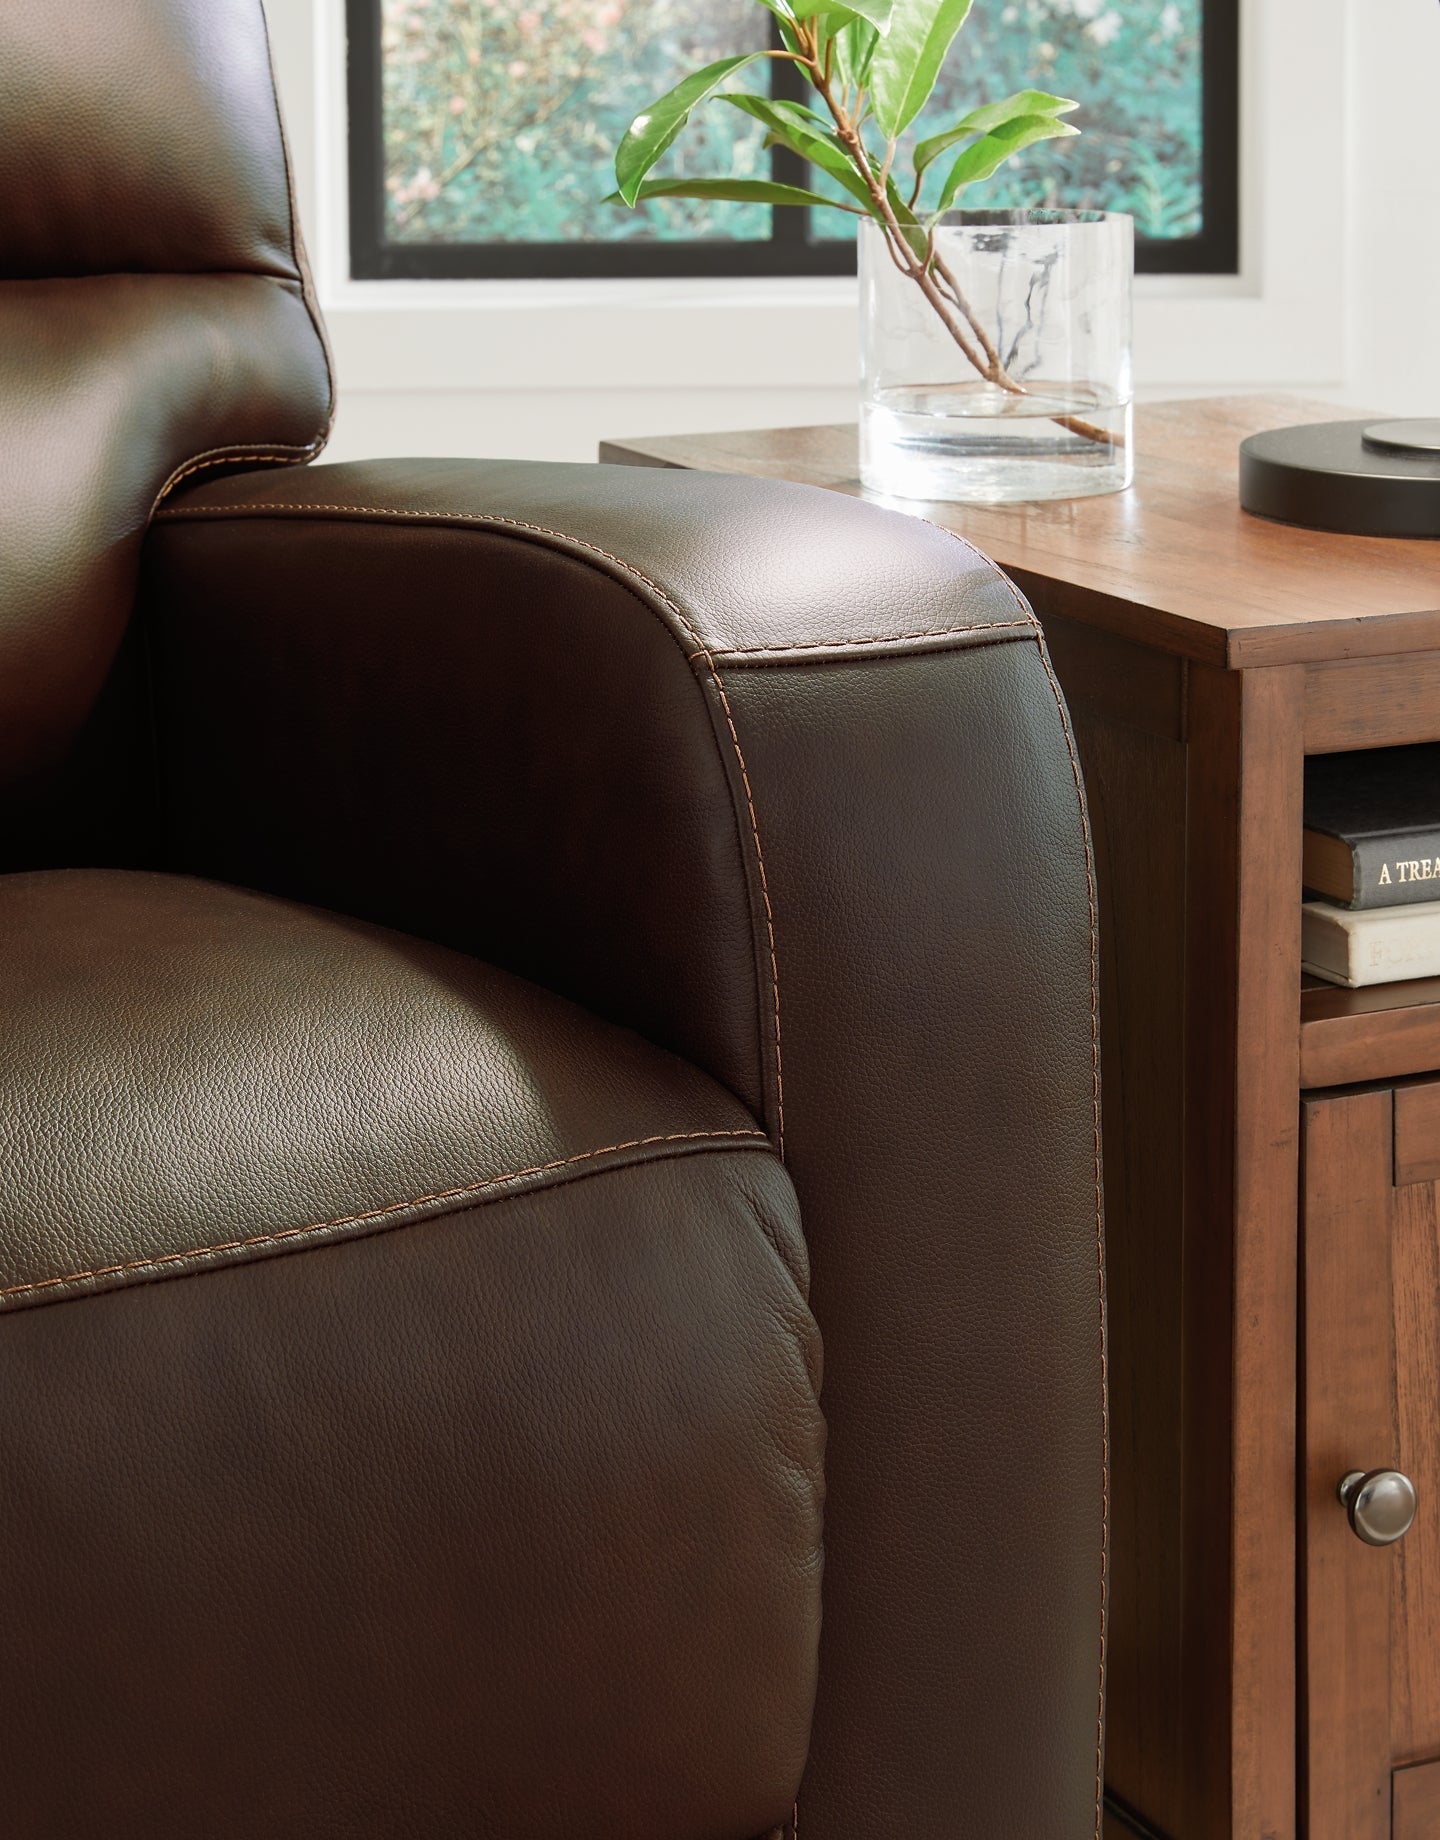 Emberla Swivel Glider Recliner at Towne & Country Furniture (AL) furniture, home furniture, home decor, sofa, bedding